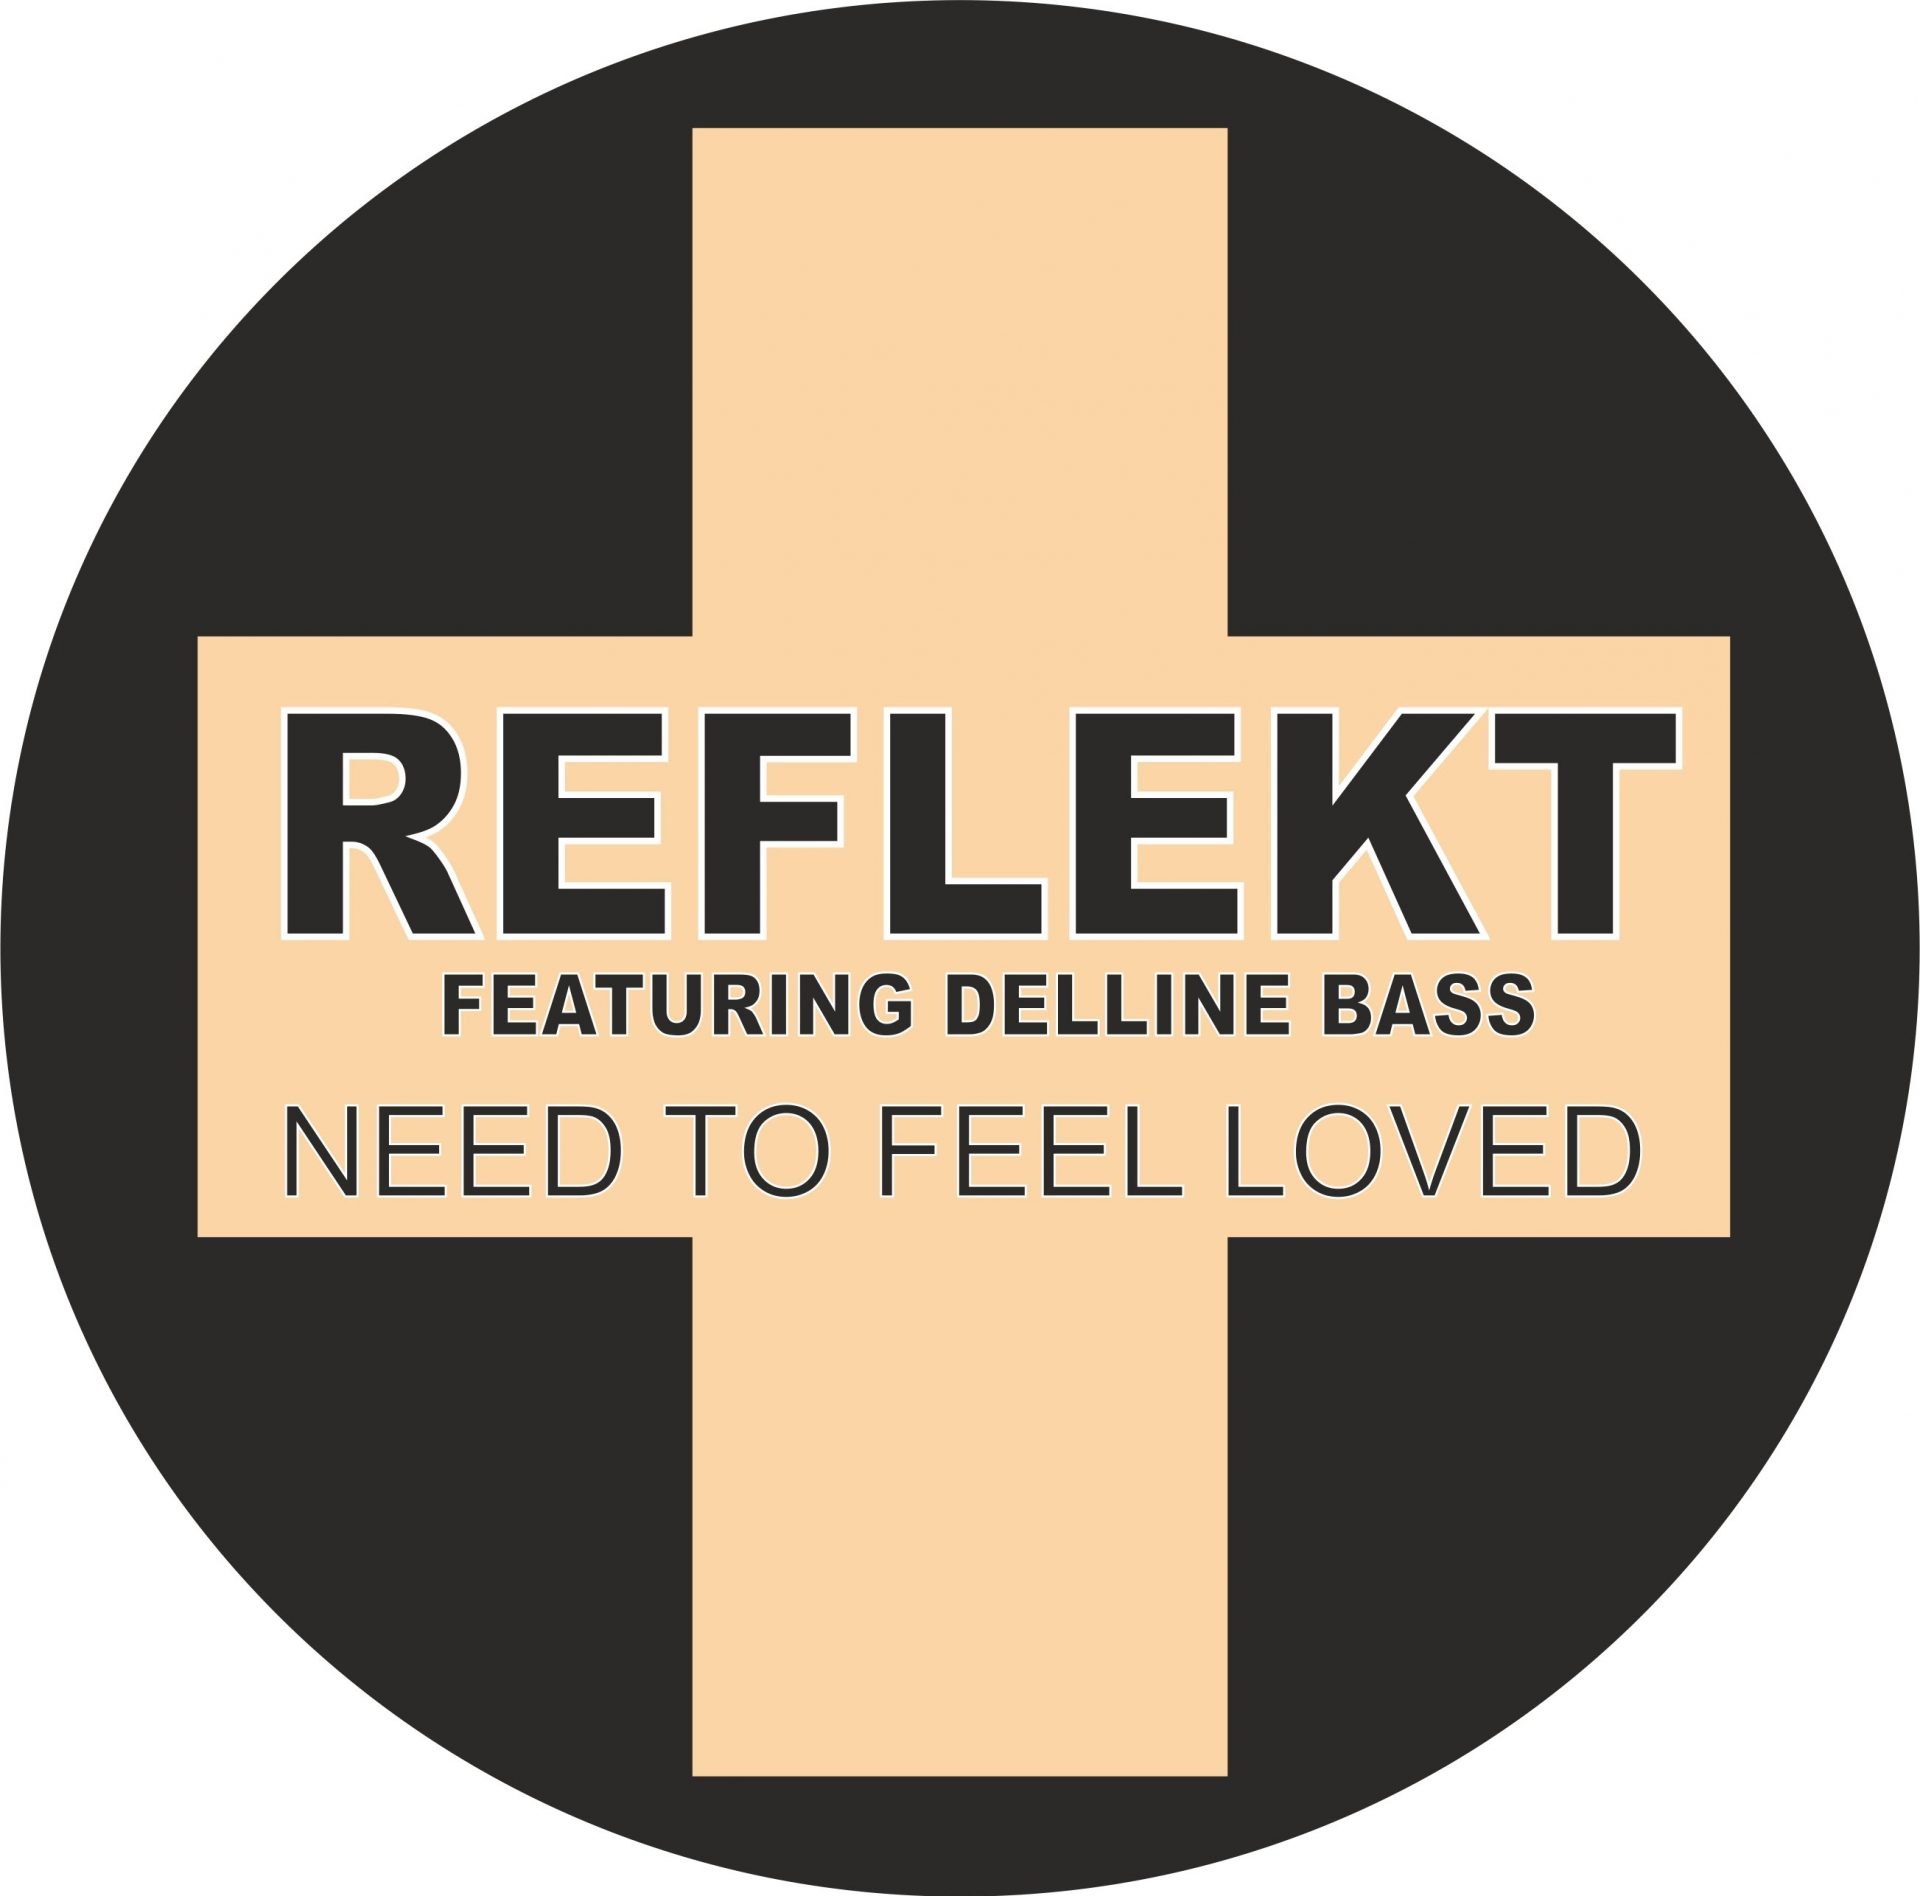 Dj frankie need to feel loved. Reflekt ft. Delline Bass need to feel Loved. Reflekt feat. Delline Bass. Reflekt need to feel Loved. Adam k Soha need to feel Loved.